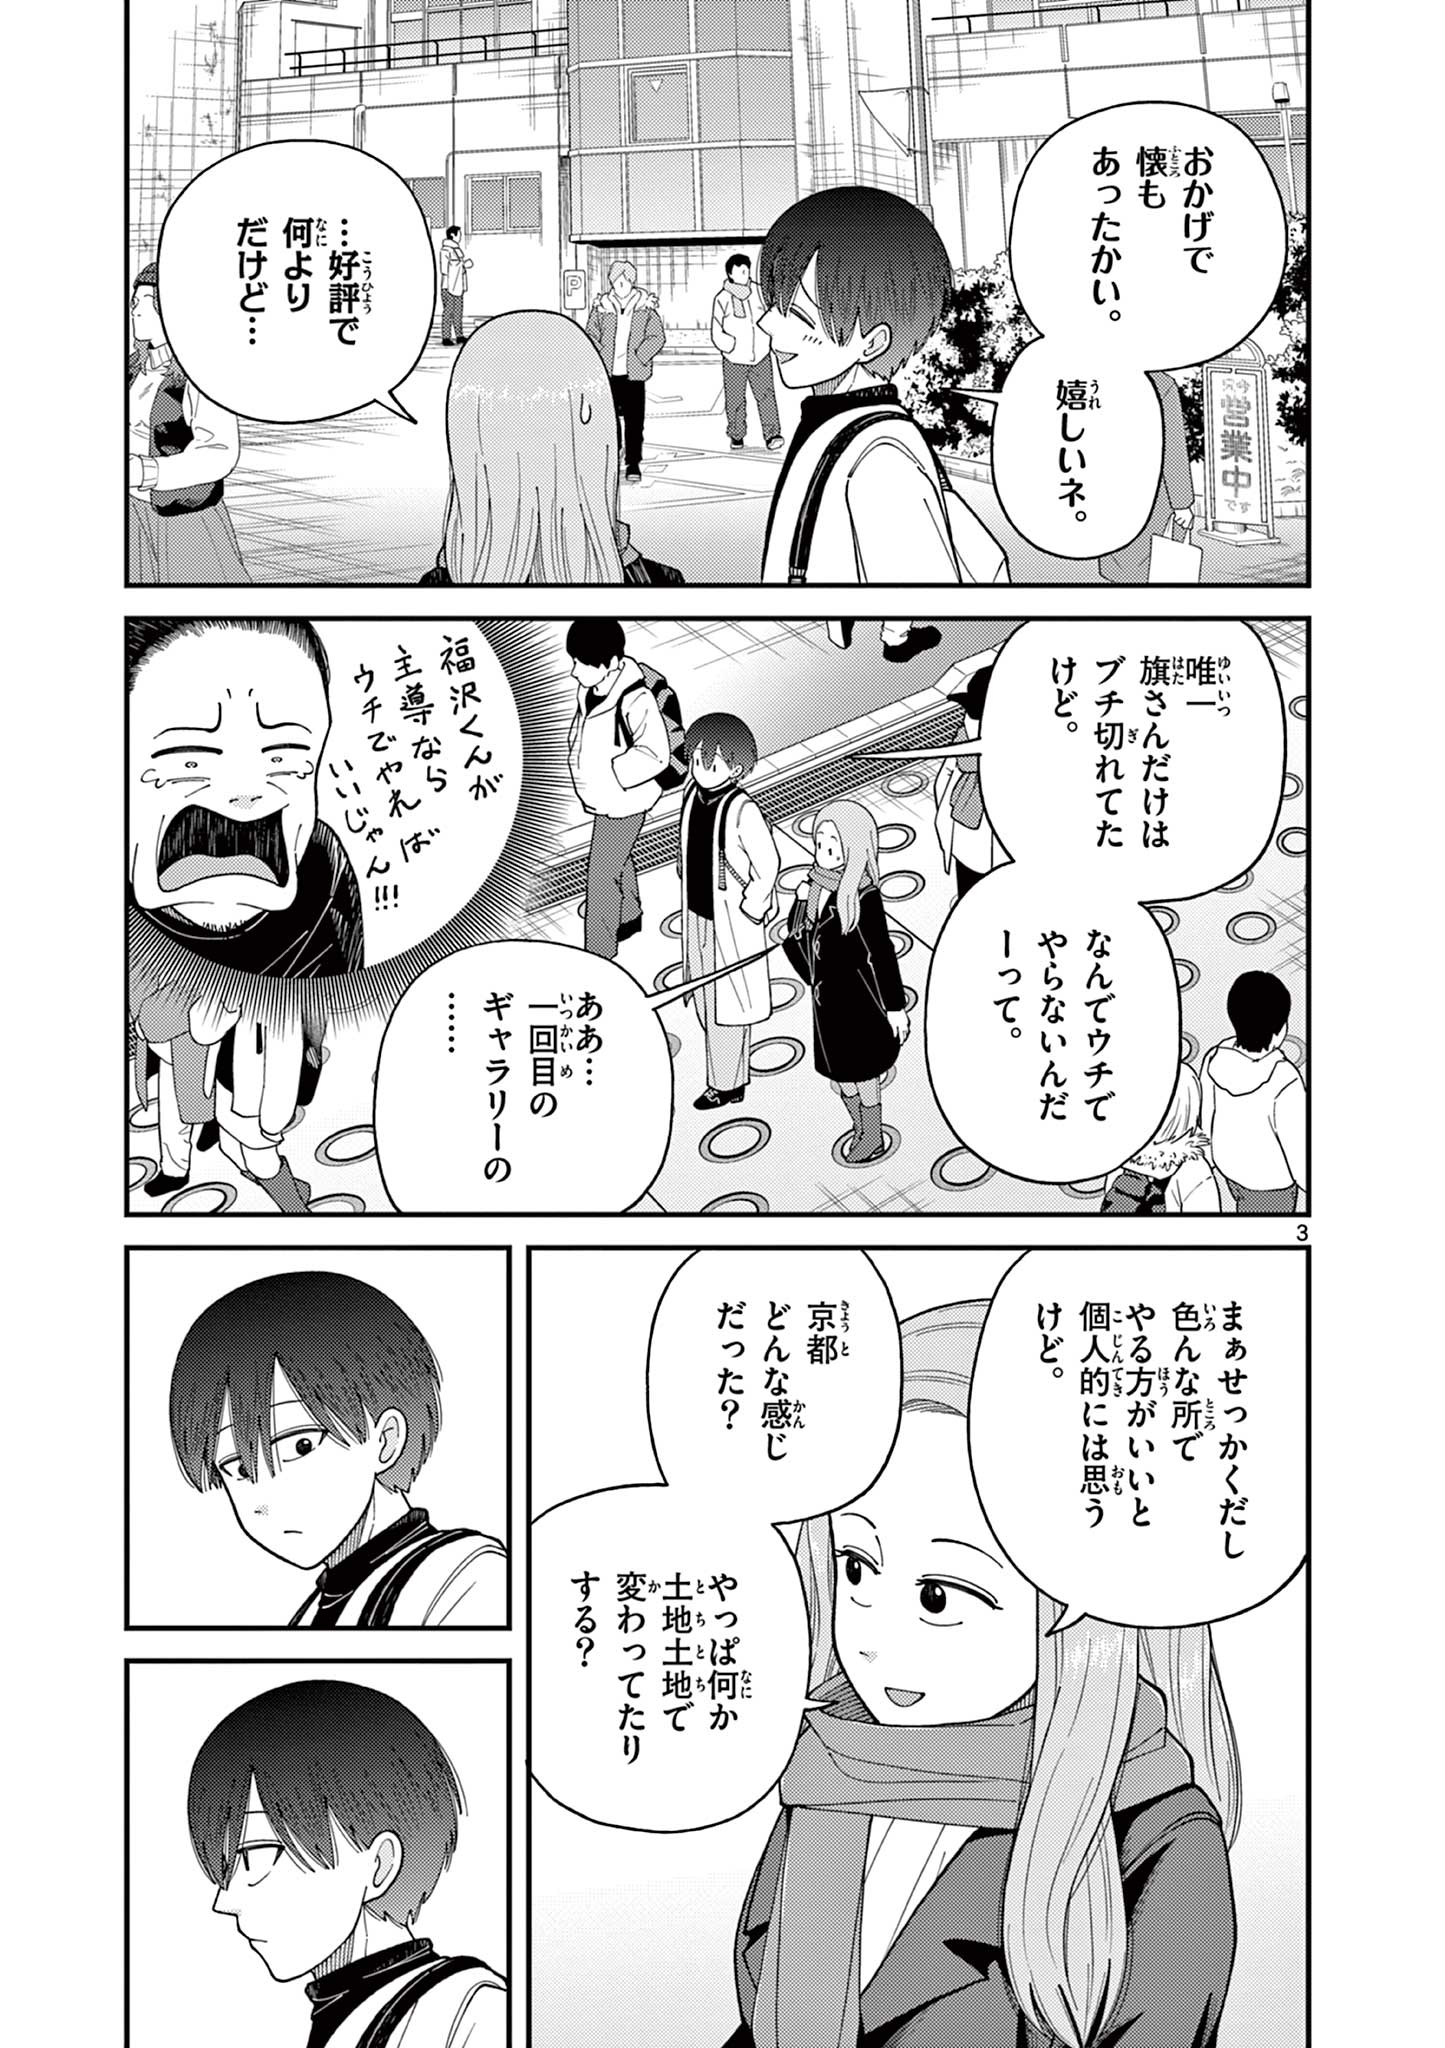 Mimozaizumu - Chapter 20_End - Page 3